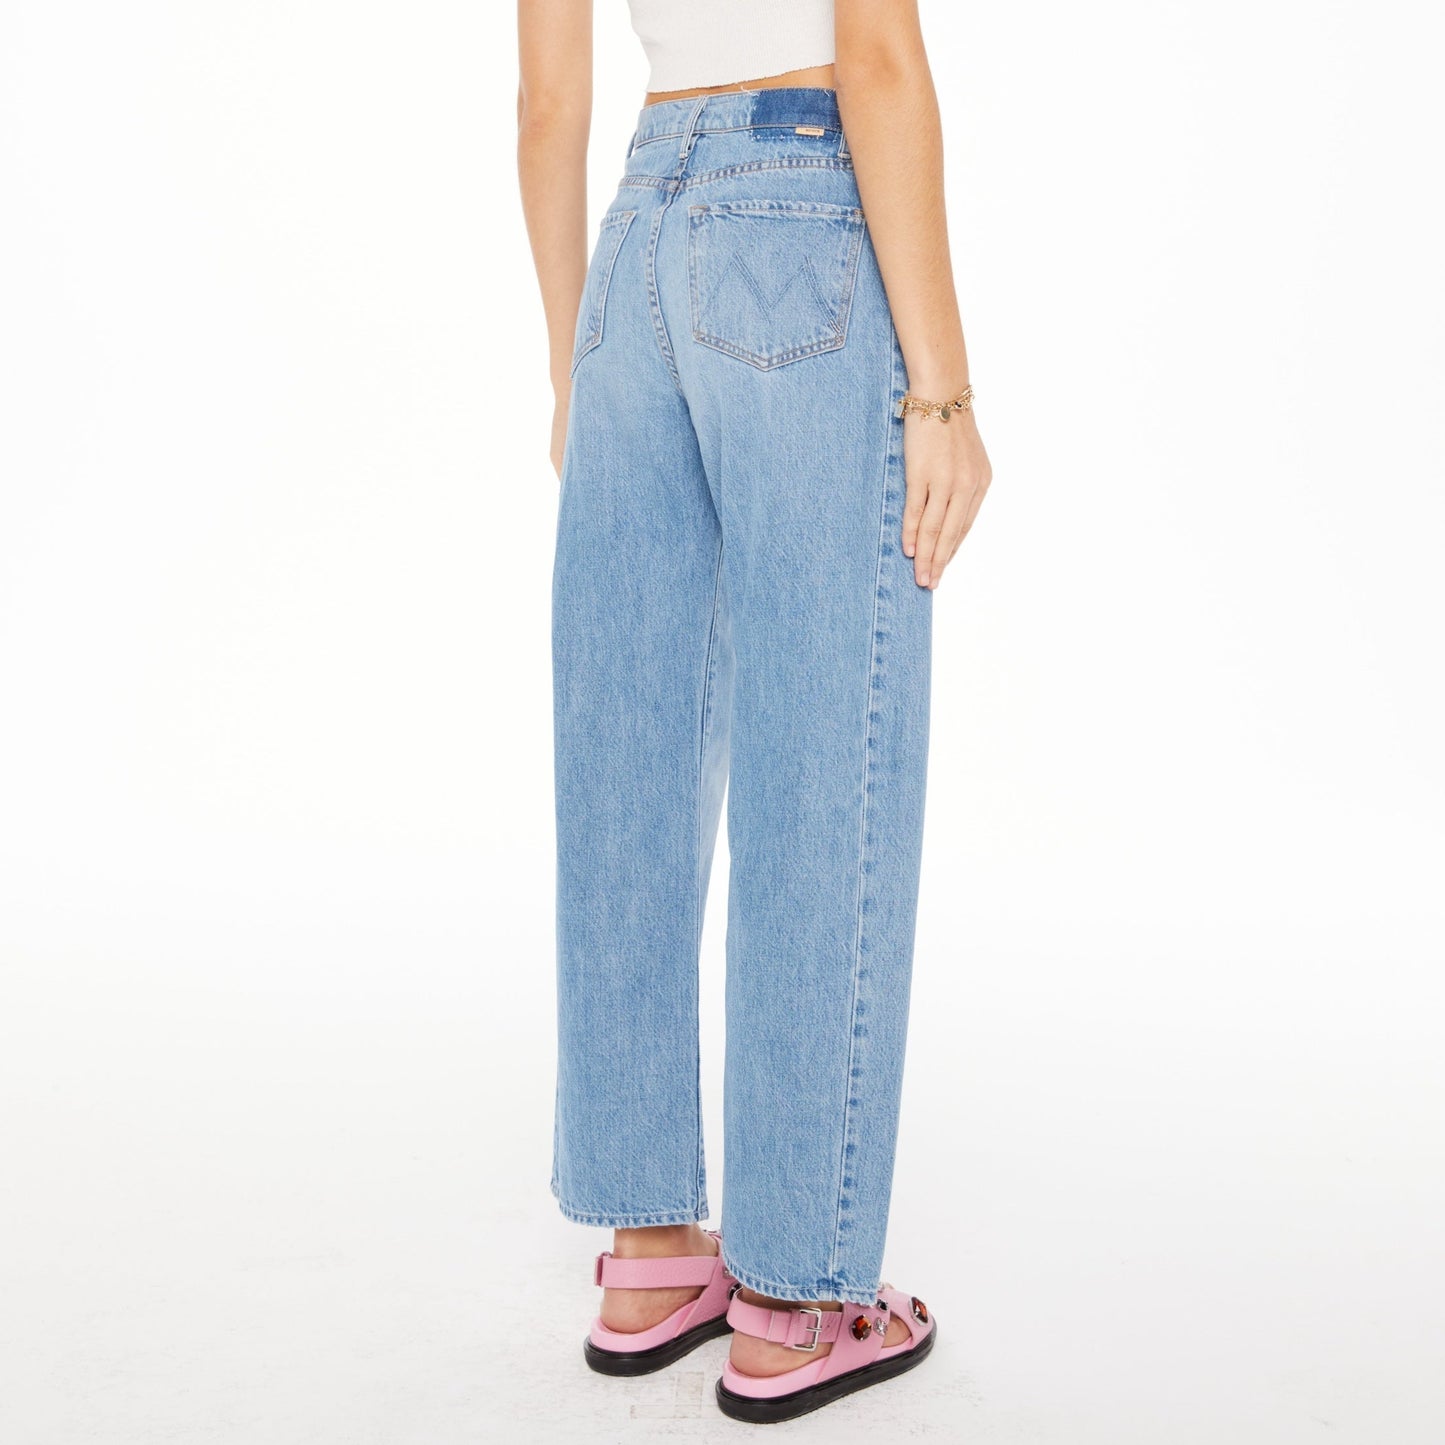 Half-Pipe Flood Jean in Material Girl